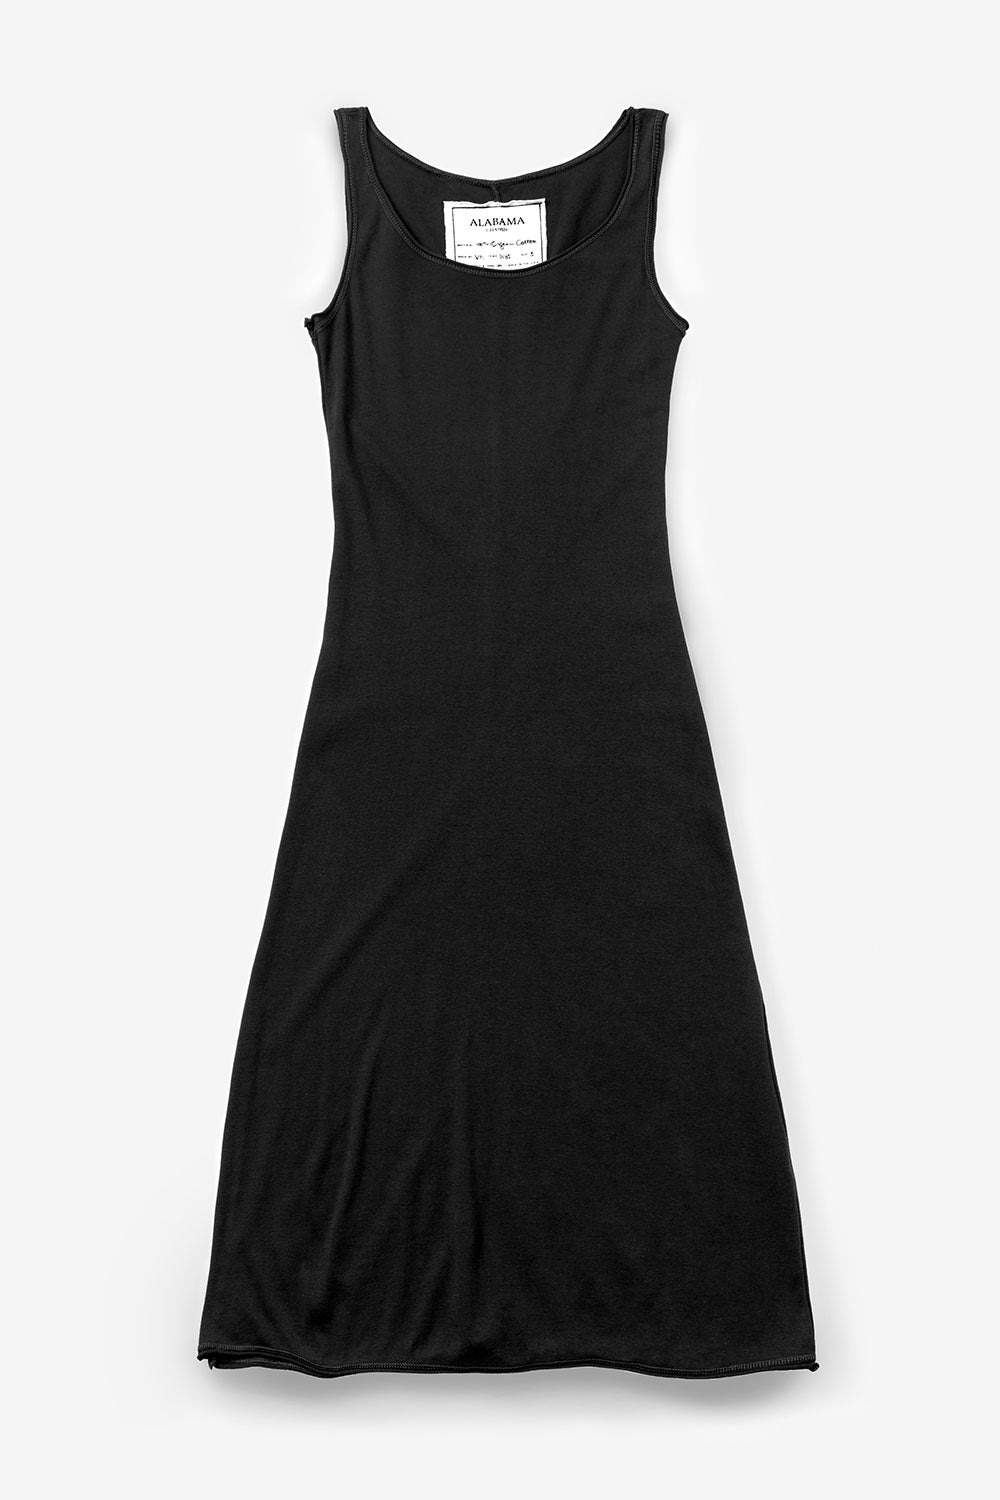 alabama chanin the slip dress in black | slow fashion at basic.  